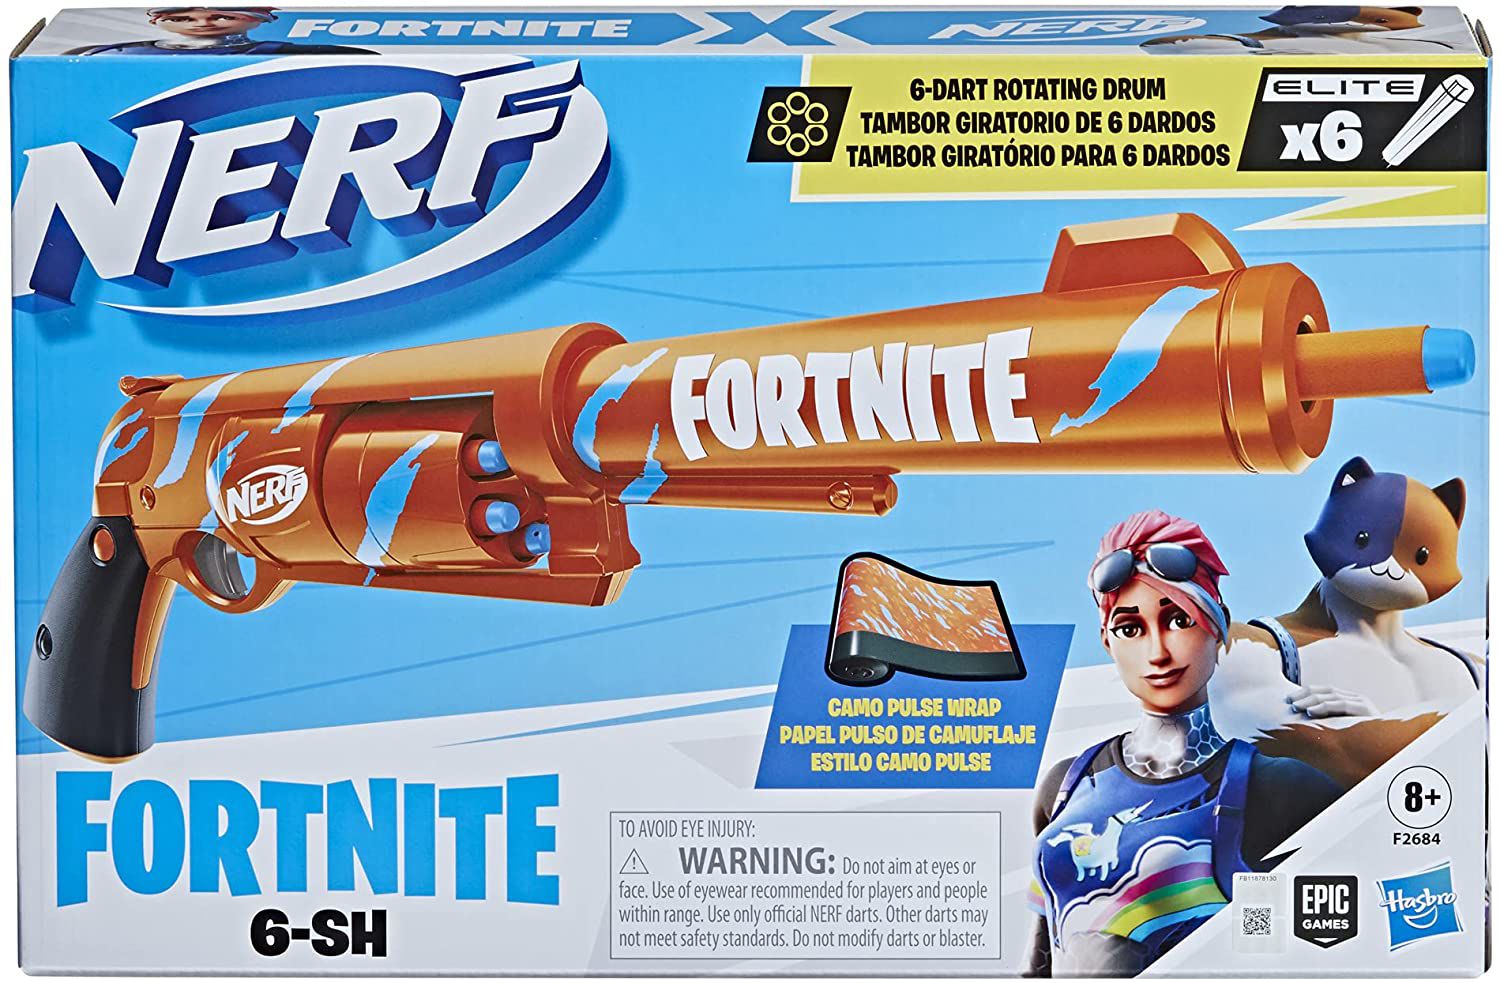 Lança Dardos Nerf Fortnite SMG-E - Hasbro